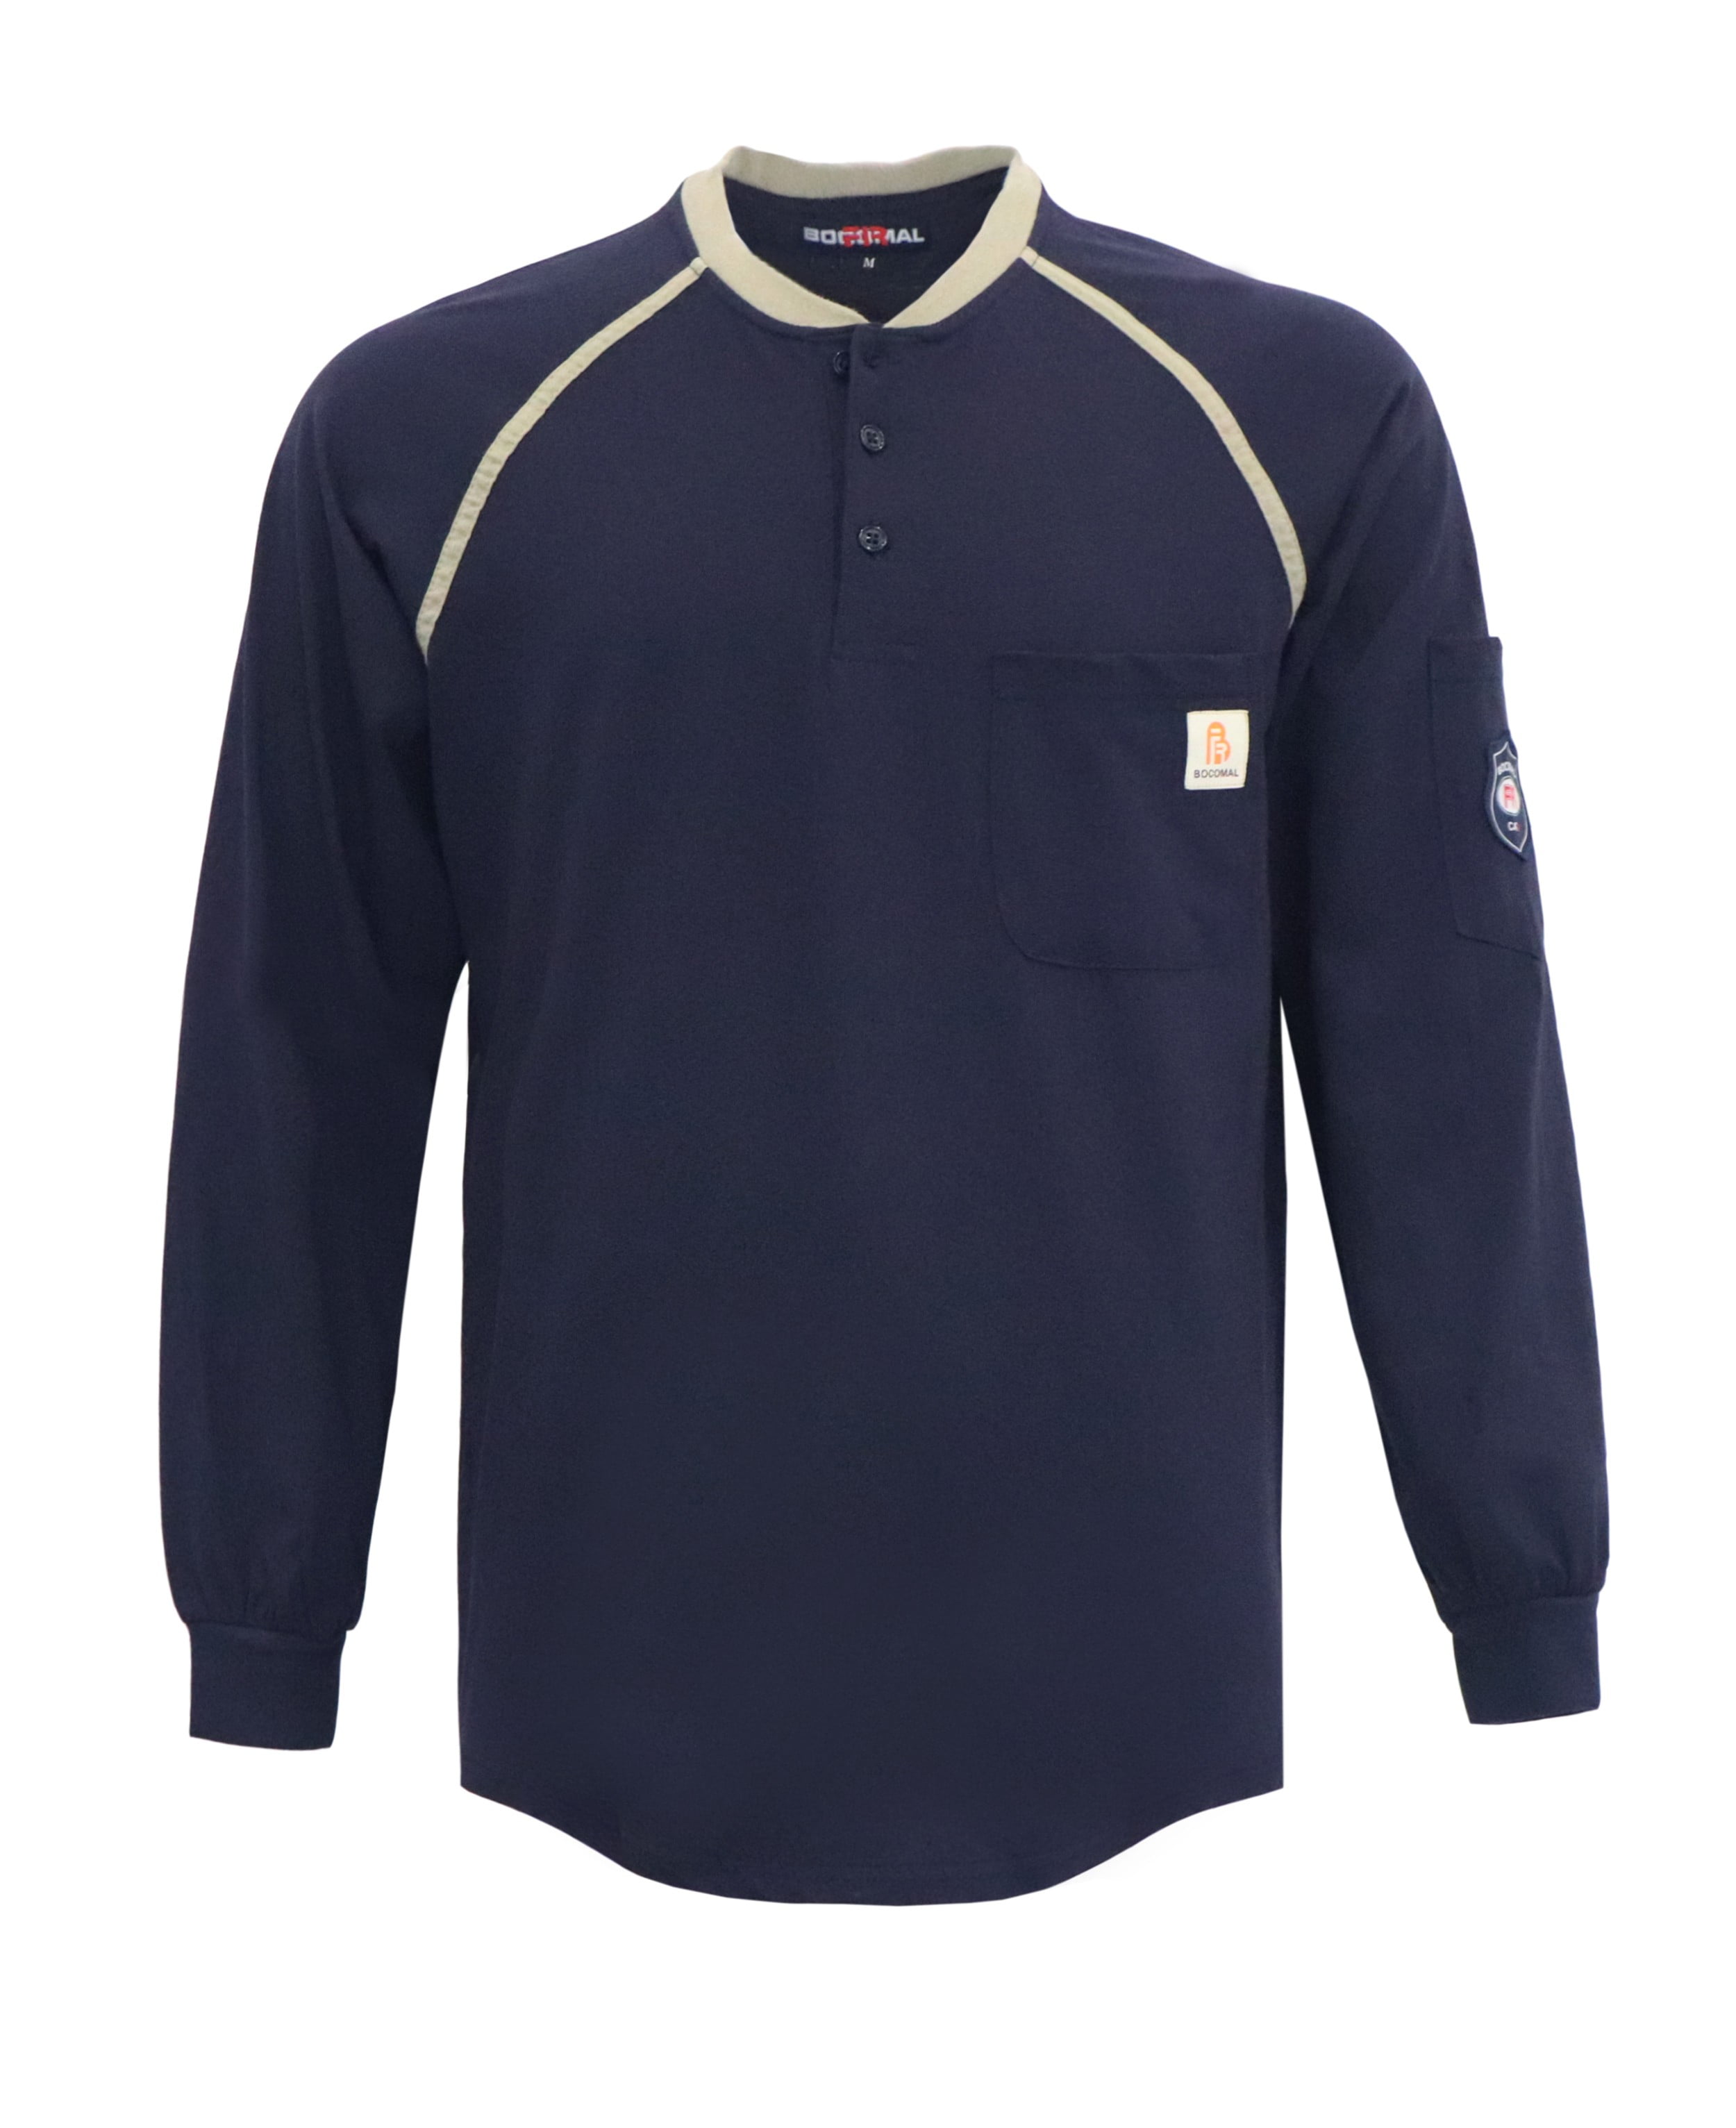 BOCOMAL FR Shirts Flame Resistant Shirt 5.5oz 100% Cotton Light Weight CAT2 Fire Retardant Henley Shirts